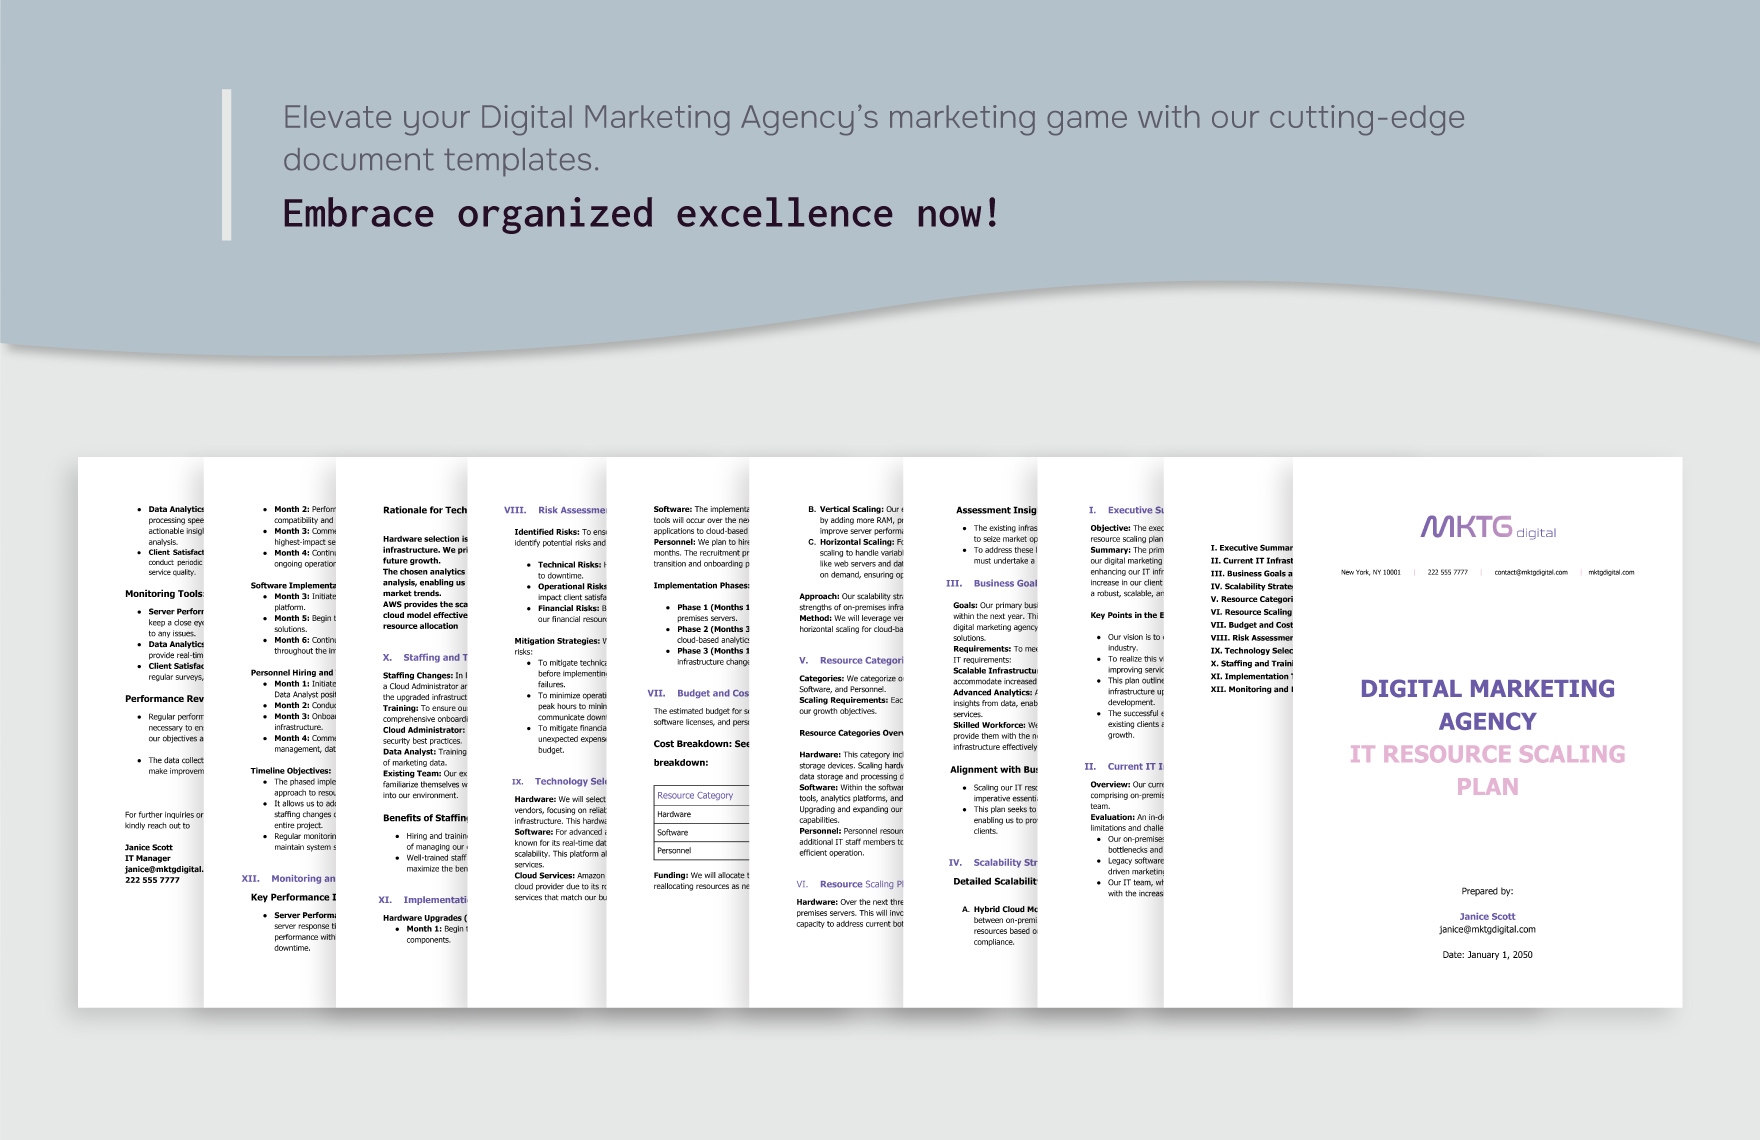 Digital Marketing Agency IT Resource Scaling Plan Template